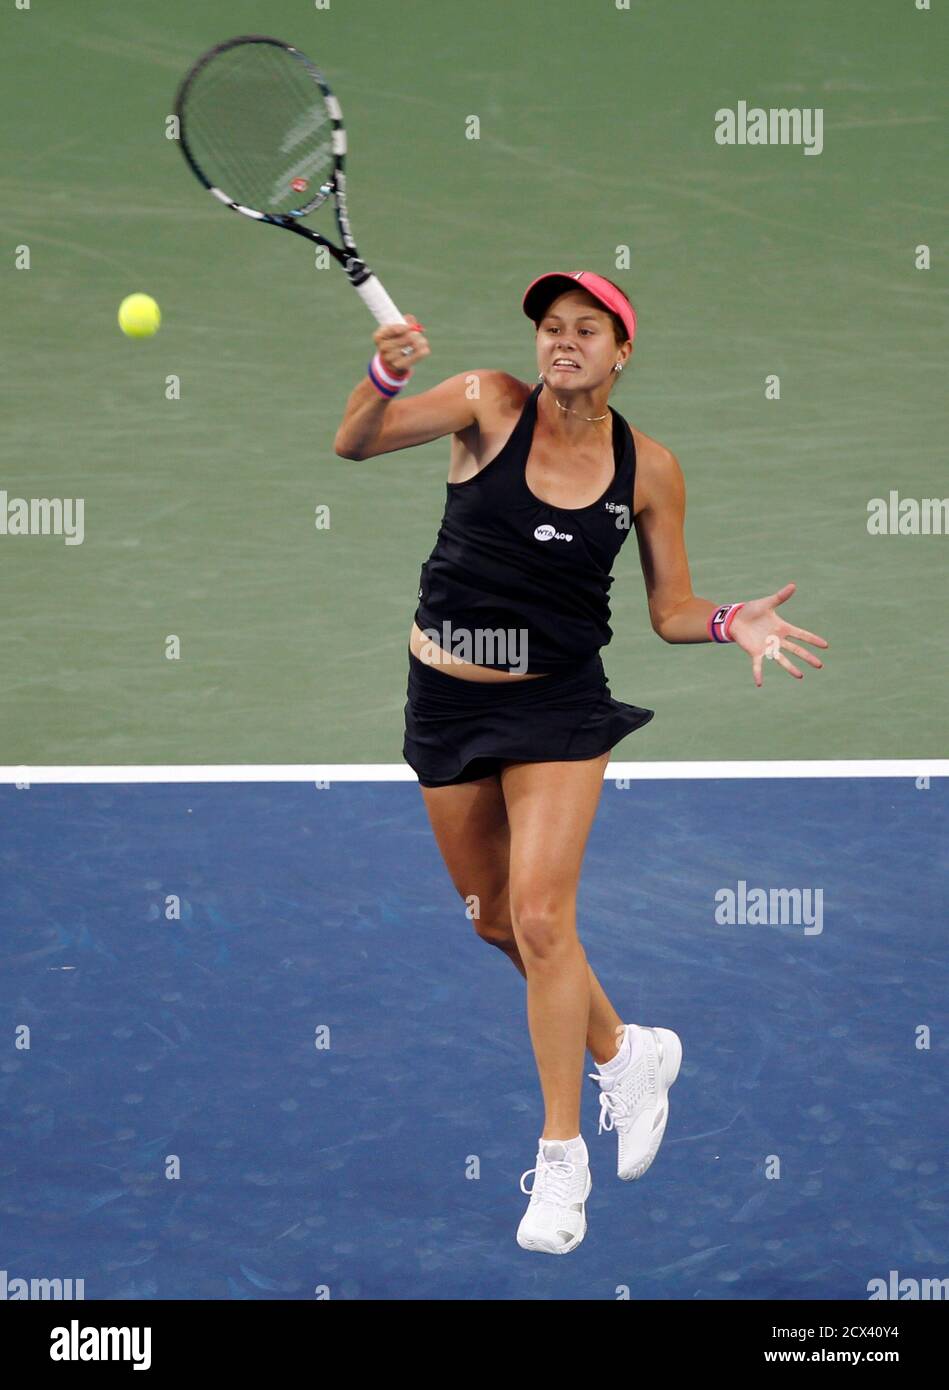 Jana Cepelova of Slovakia hits a return ball to Venus Williams of the U.S.  during their first round match at the Women's Cincinnati Open tennis  tournament in Cincinnati, Ohio August 12, 2013.